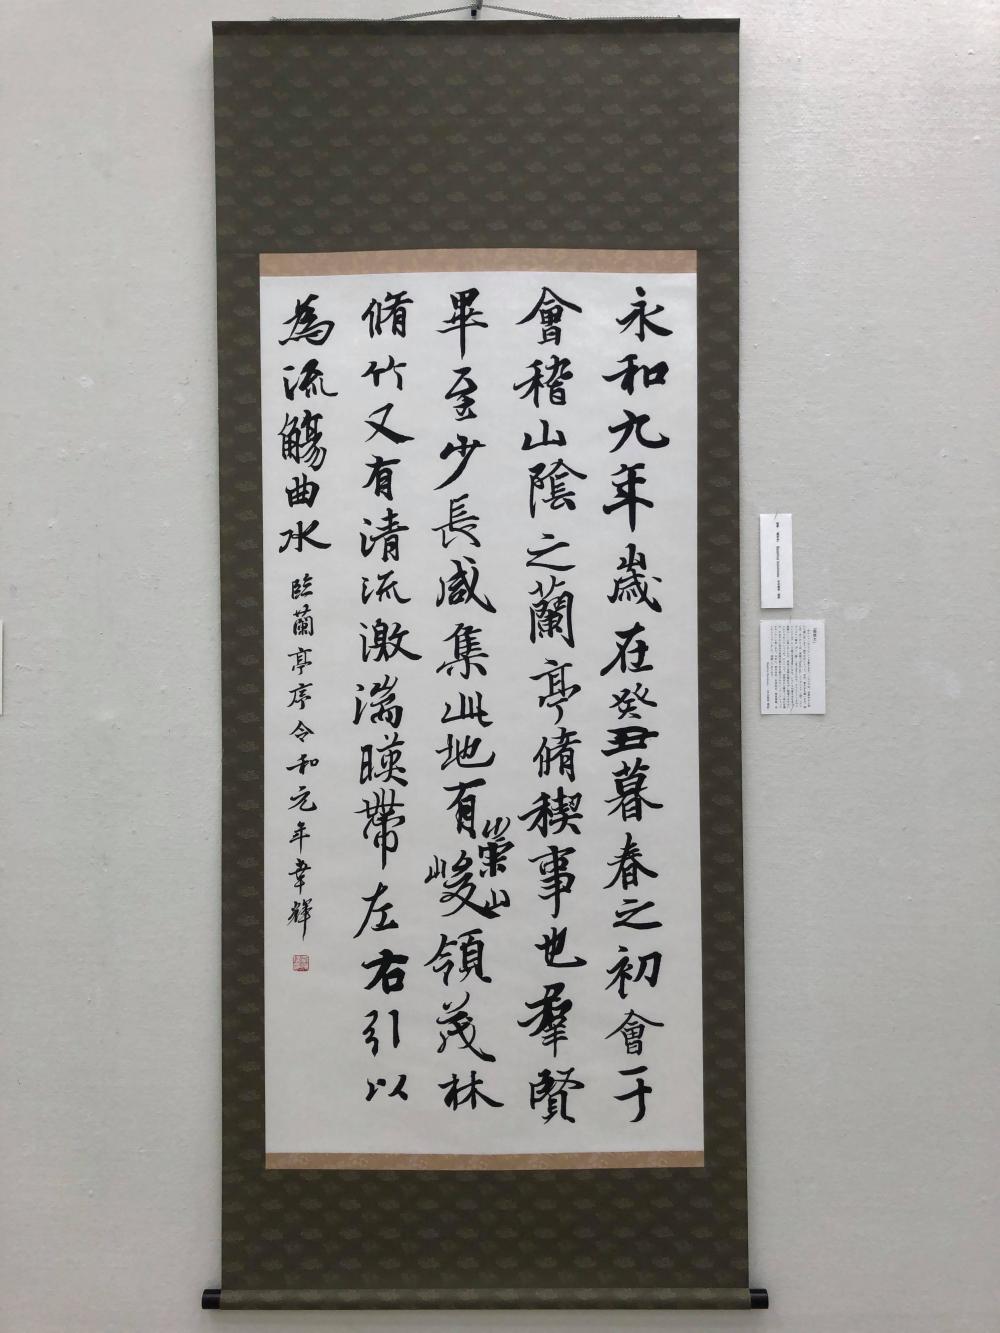 Calligraphy done in 2019. The original is Lantingji Xu, from Chinese calligrapher Wang Xizhi.